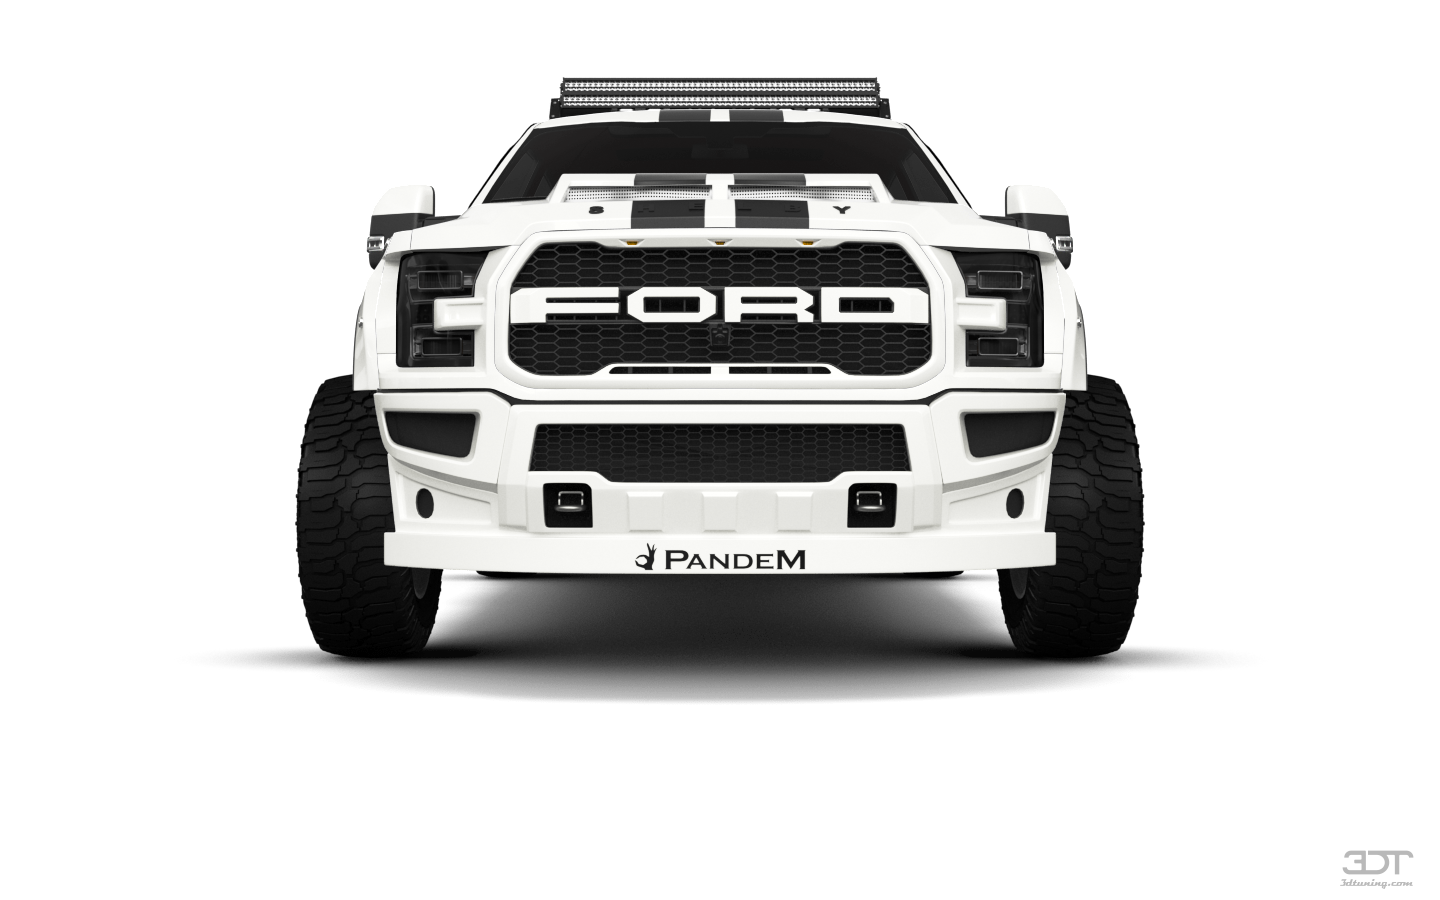 Ford F-150 Raptor 4 Door pickup truck 2017 tuning